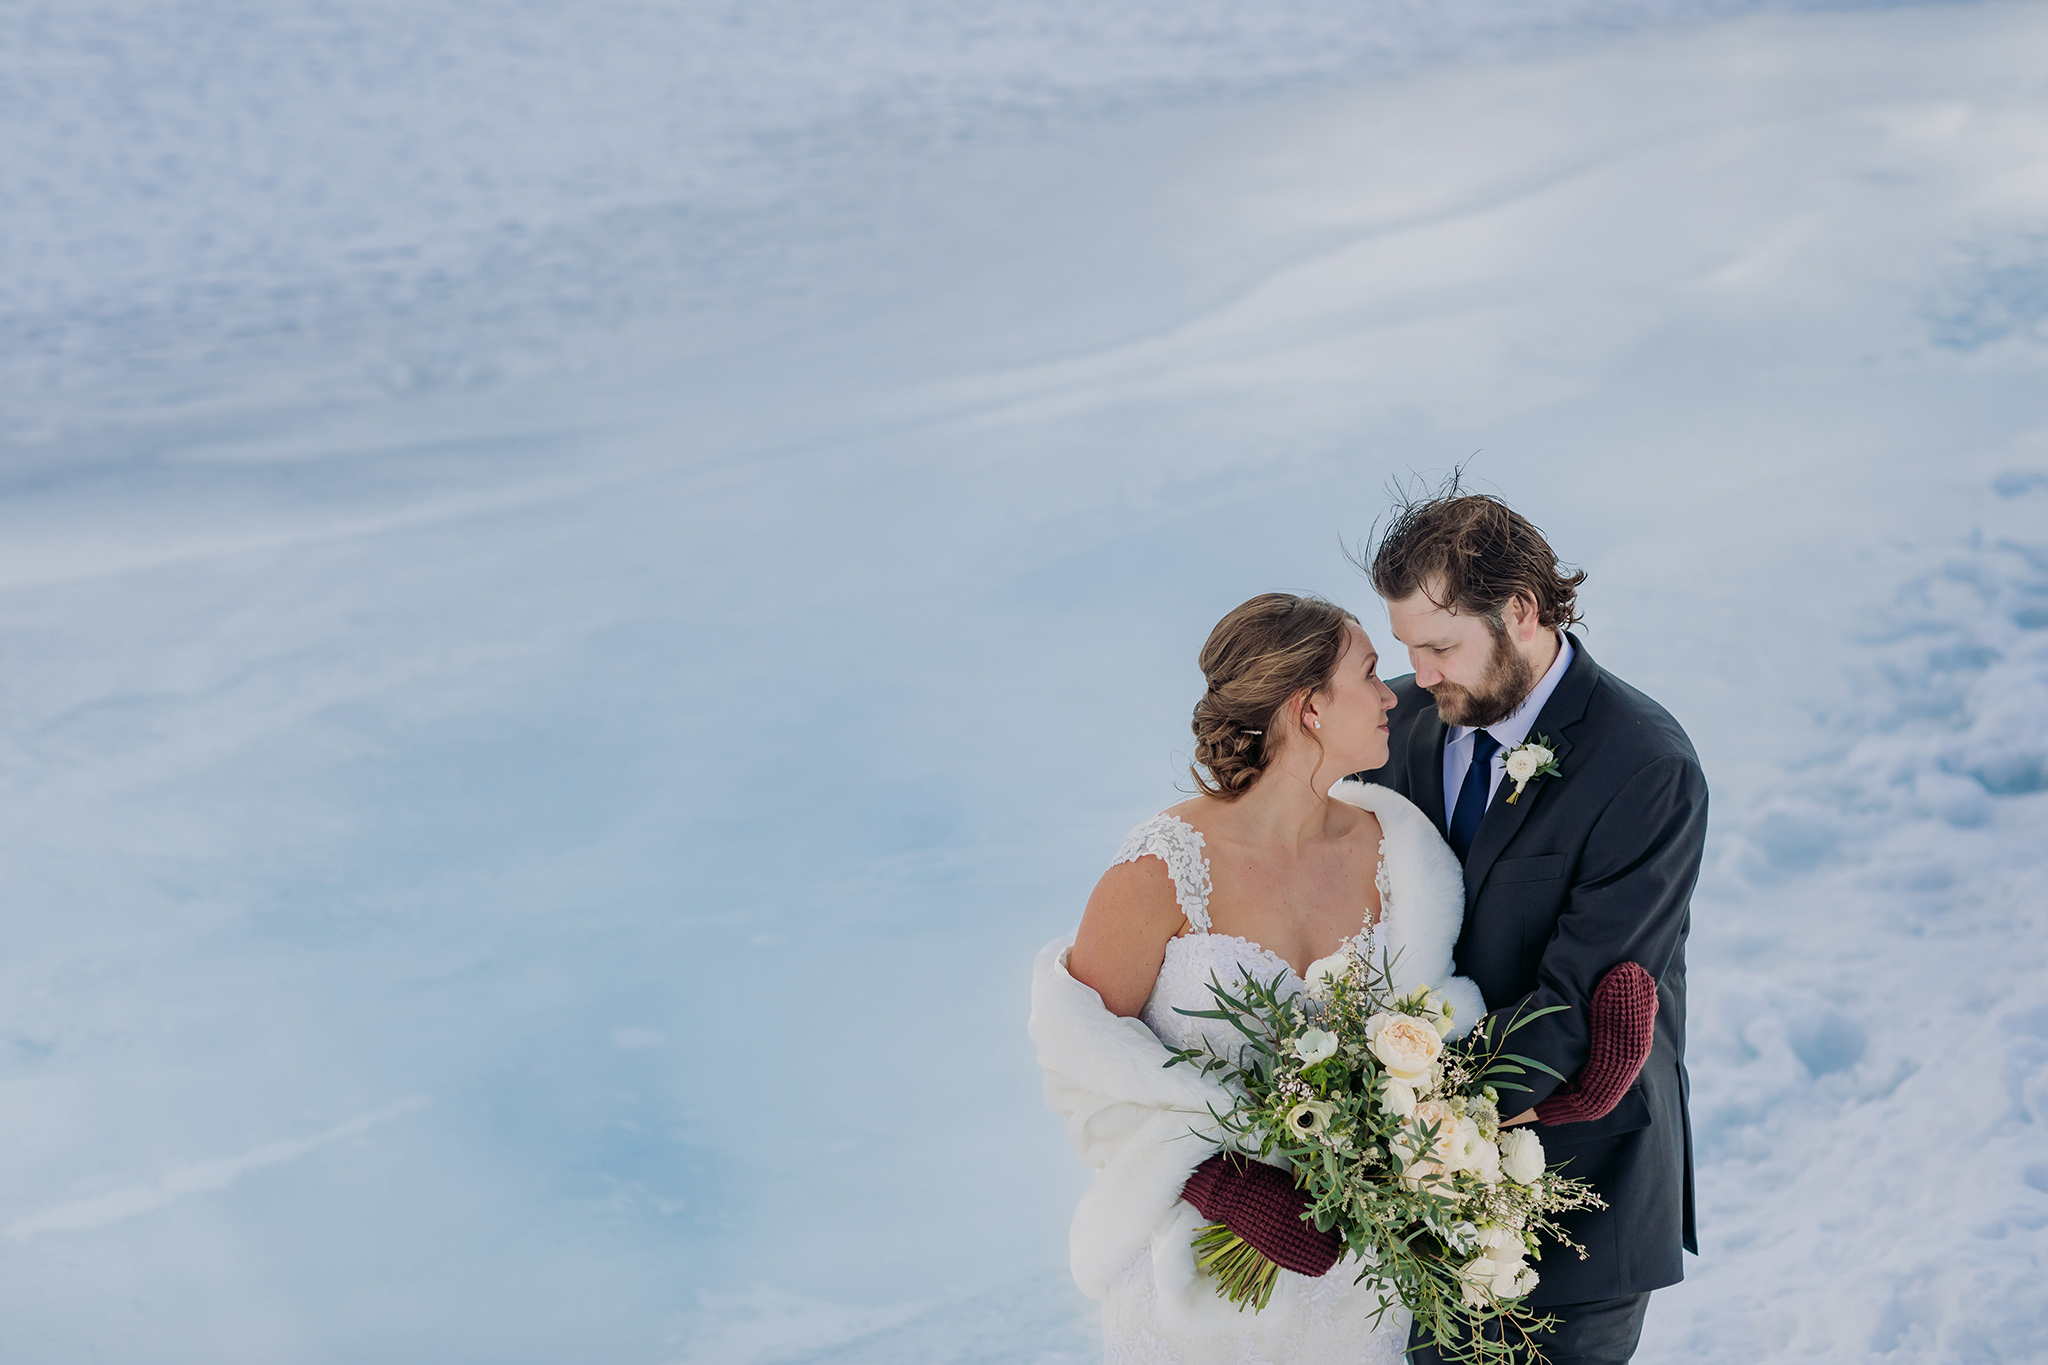 Lake Minnewanka bride & groom portraits Winter mountain wedding photos by Banff Wedding Photographer ENV Photography